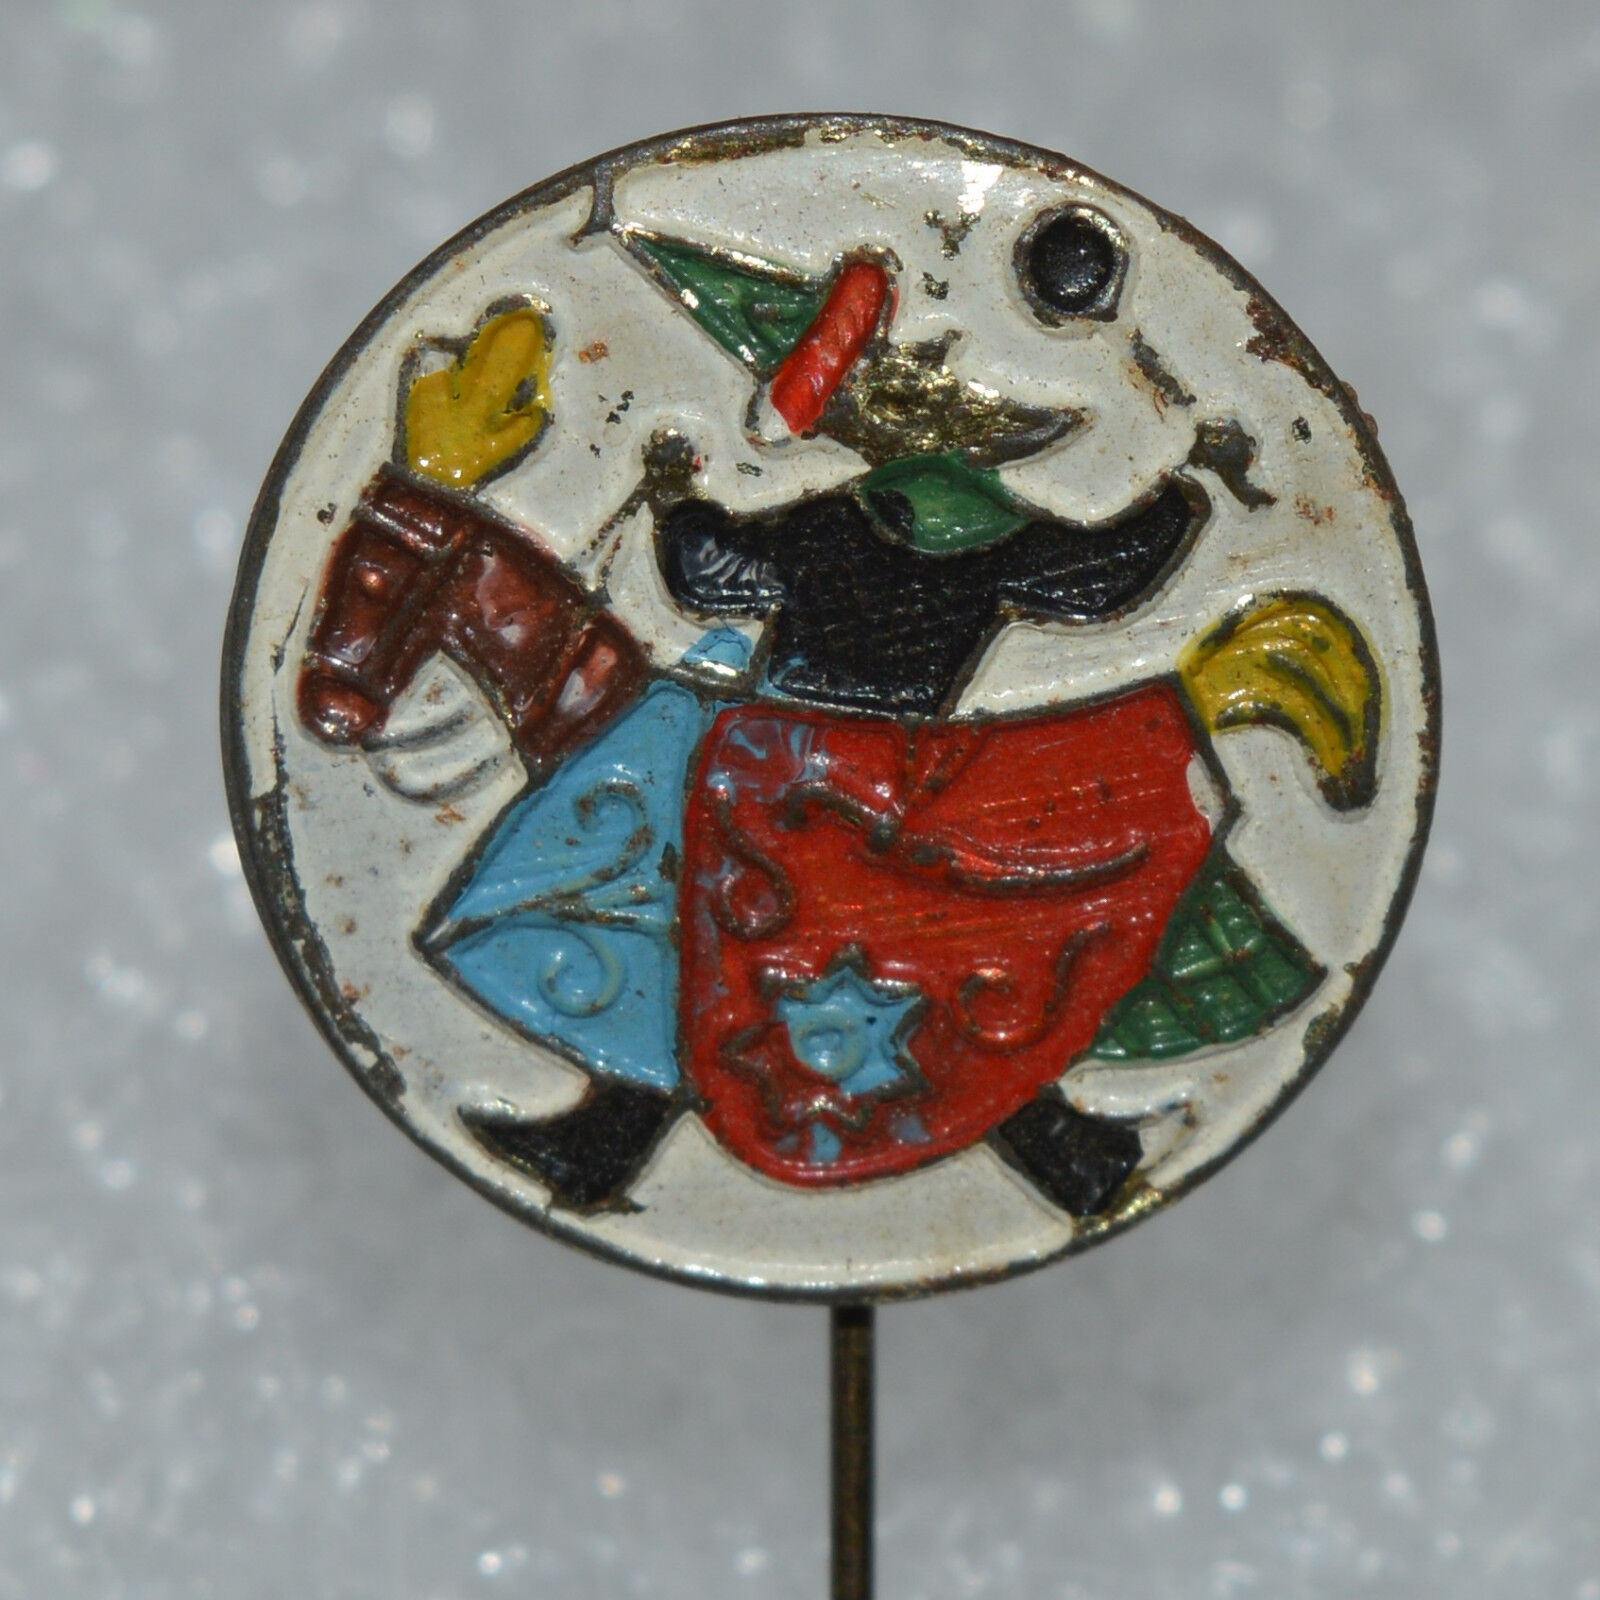 Arabian Arap Gypsy clown wizard magician juggler horse vintage pin badge